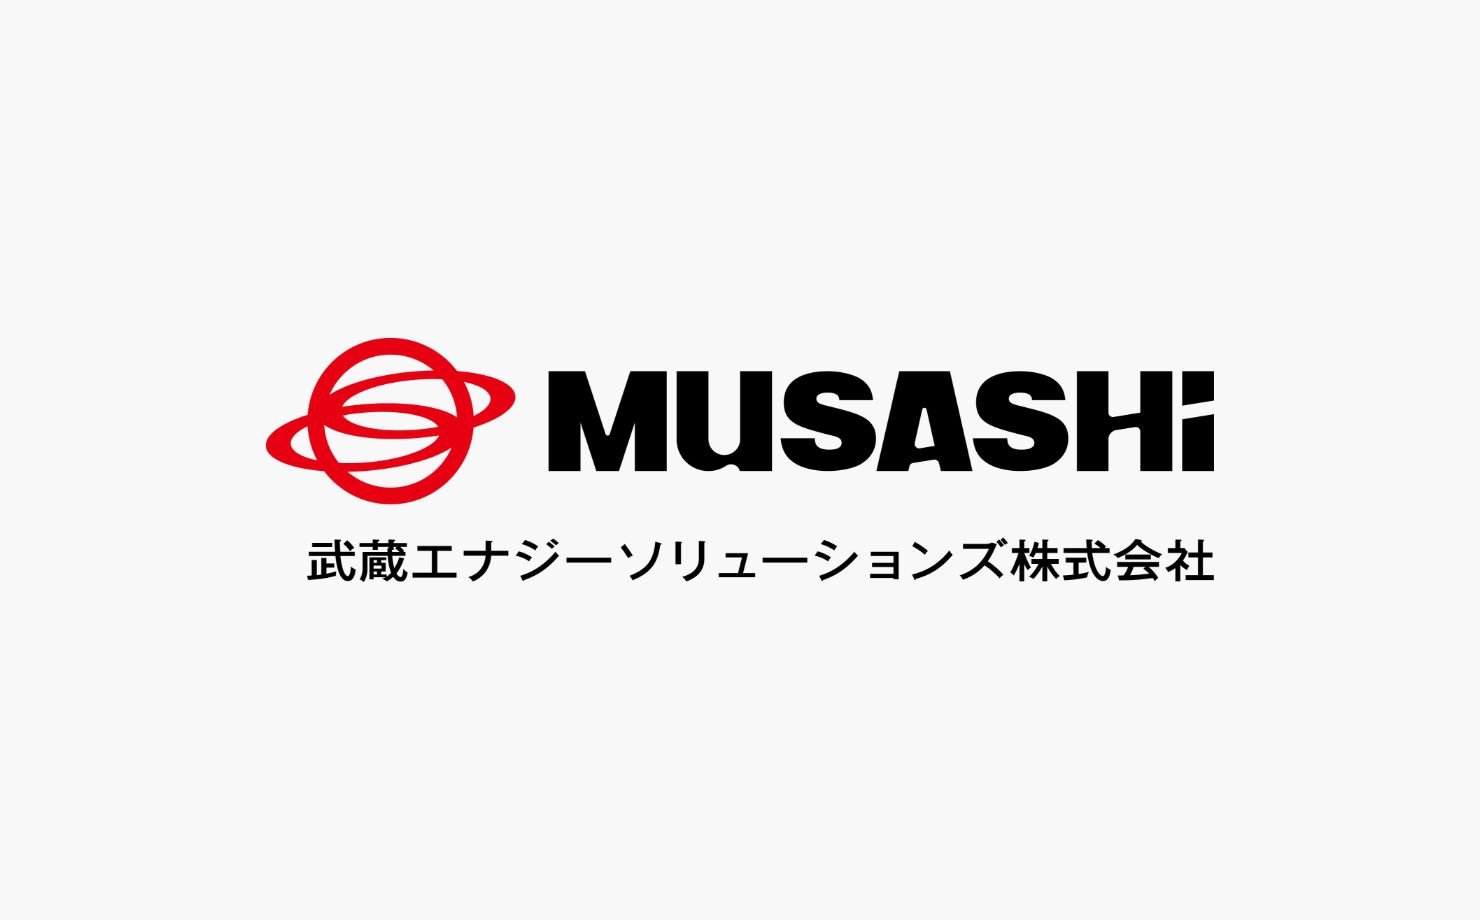 Musashi Energy Solutions Co., Ltd.